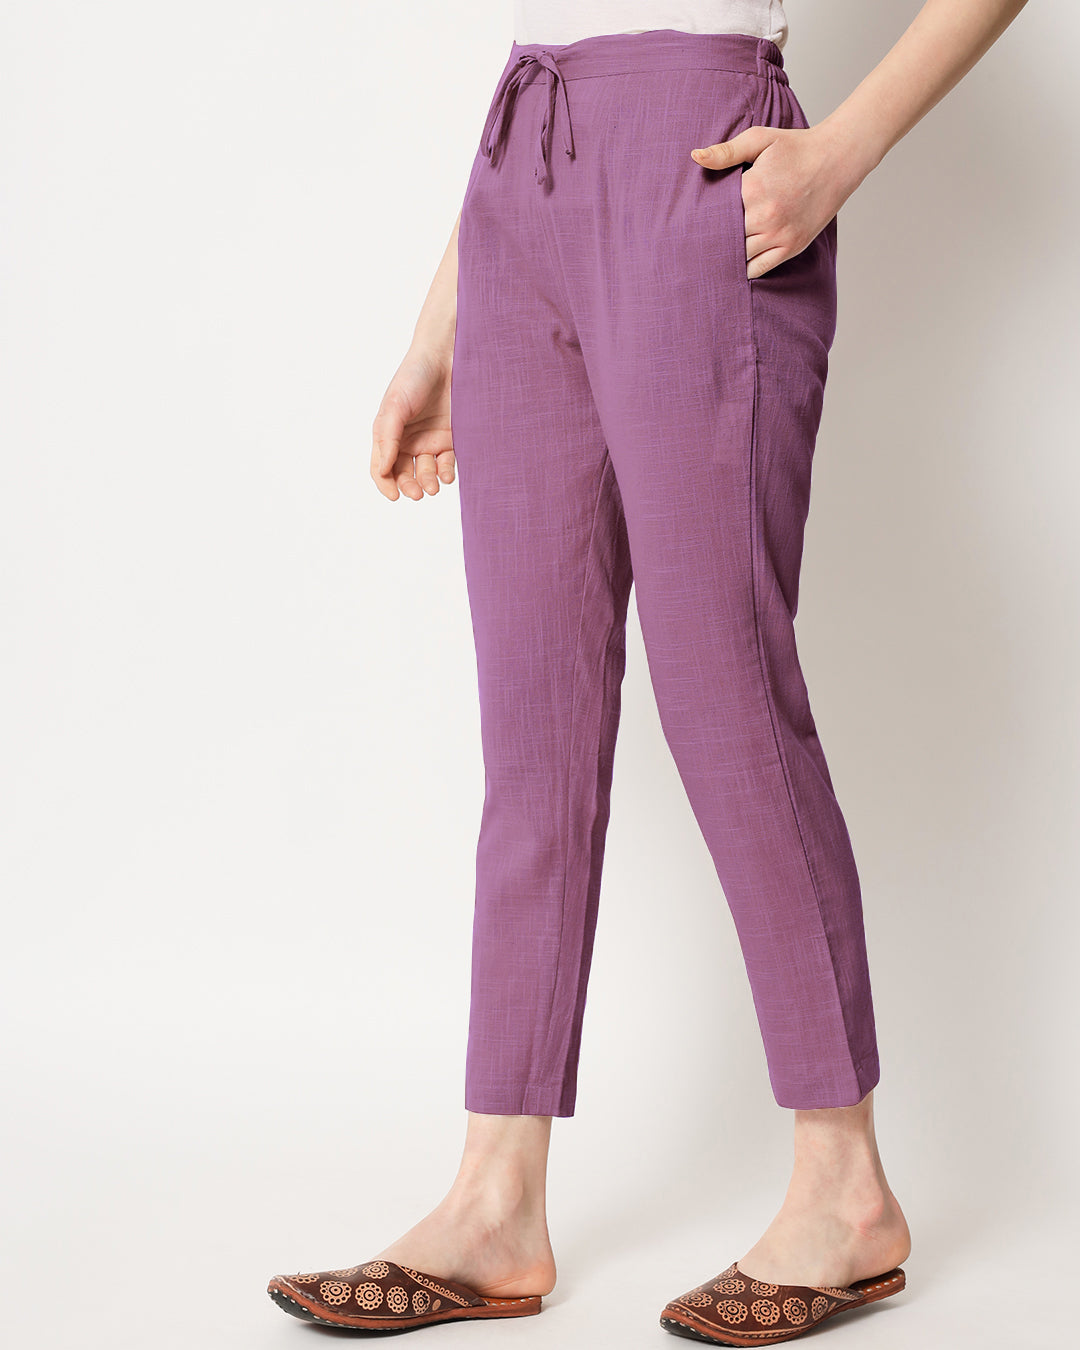 Wisteria Purple Cigarette Pants